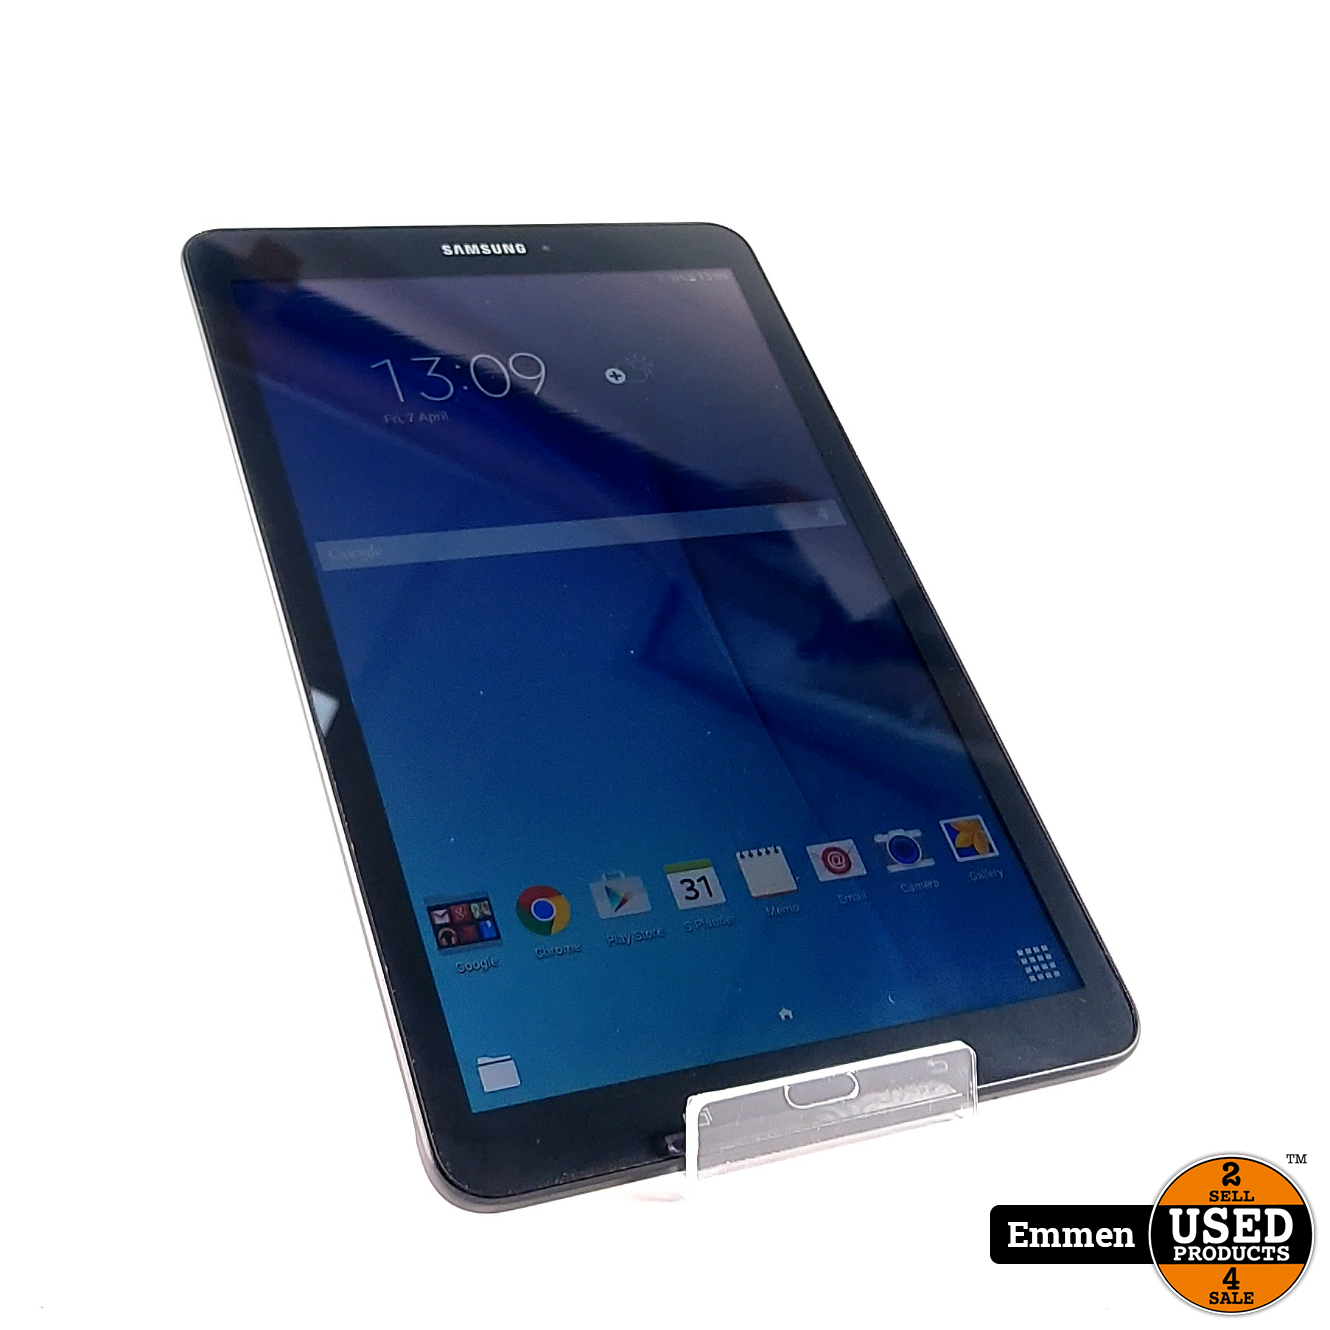 Samsung Galaxy Tab E 8GB Black/Zwart In Nette Used Products Emmen